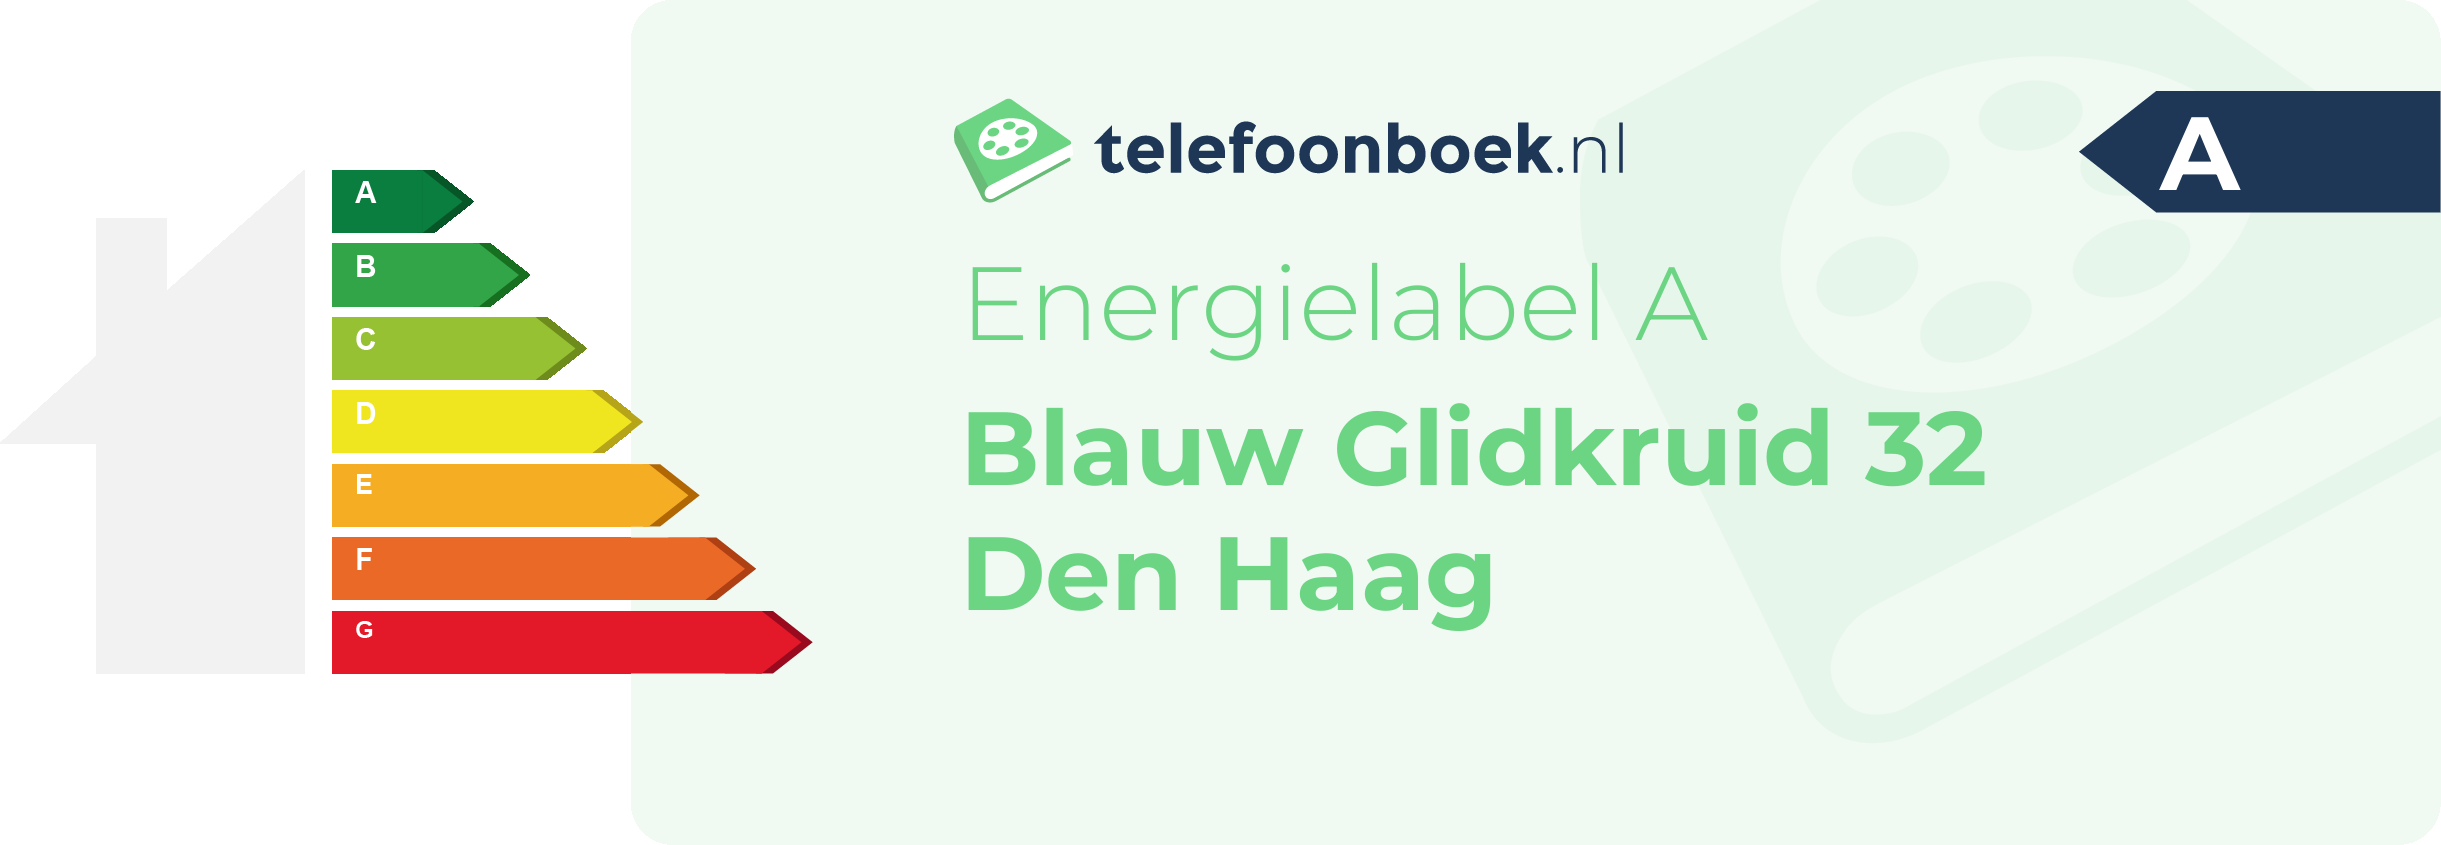 Energielabel Blauw Glidkruid 32 Den Haag